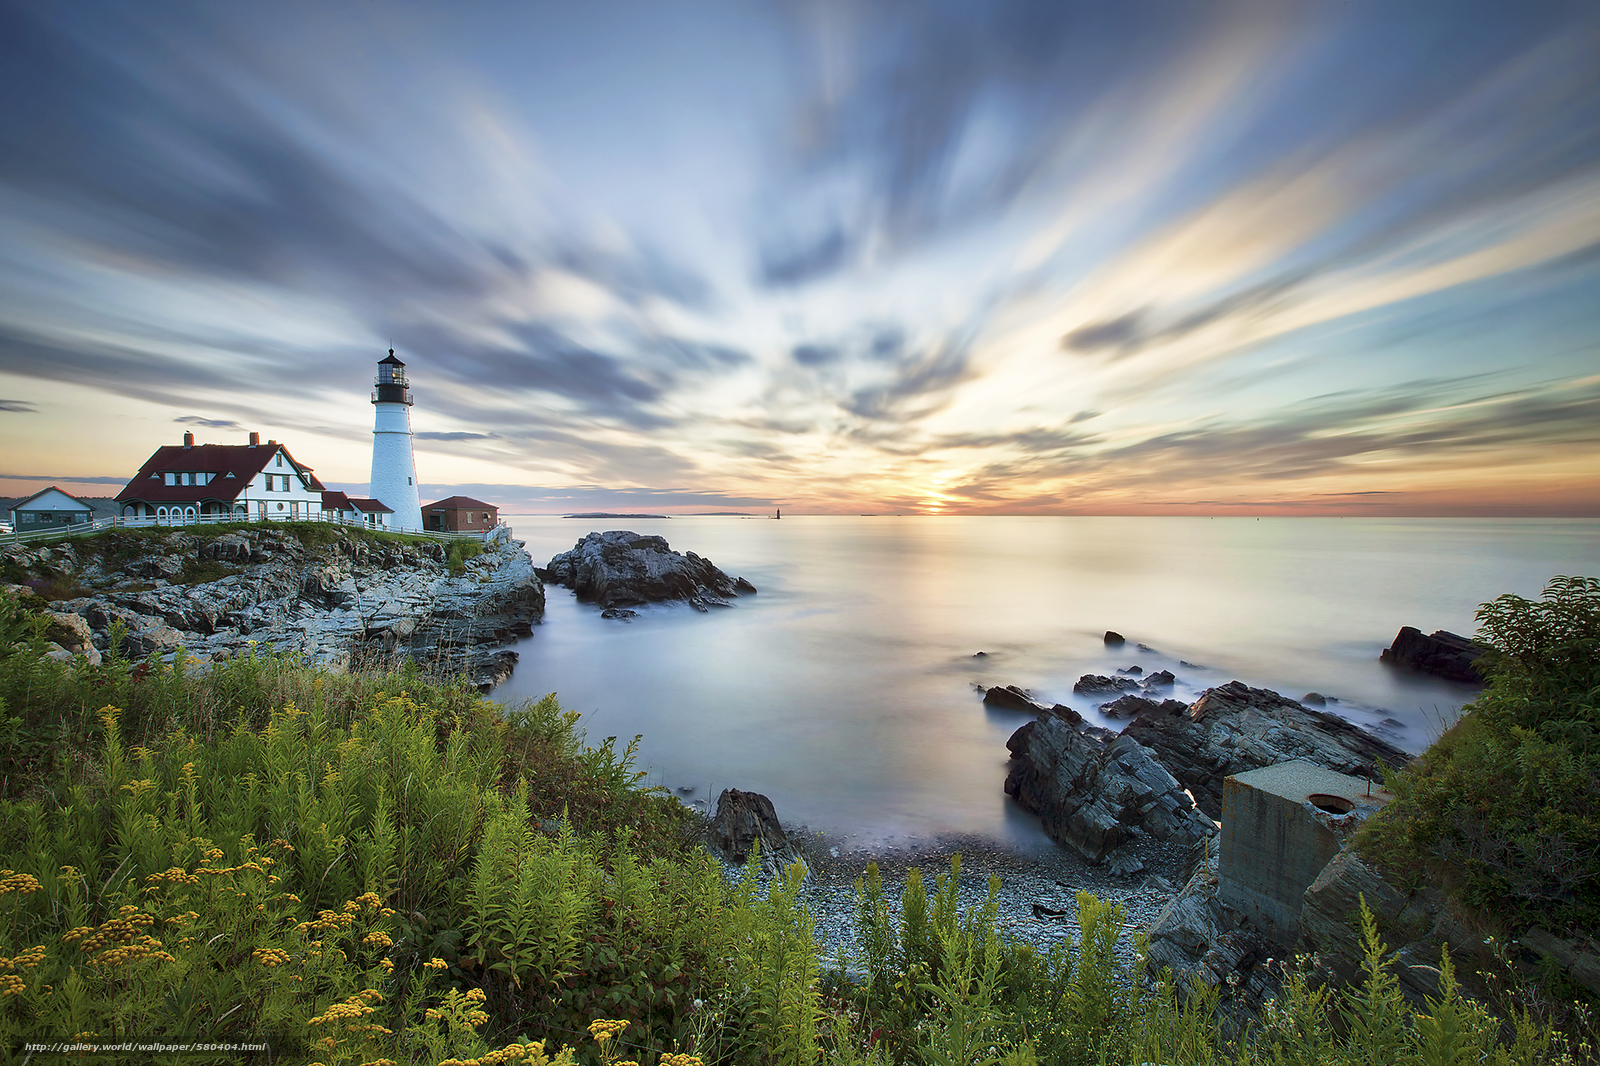 46 Maine Lighthouse Wallpaper On Wallpapersafari Images, Photos, Reviews